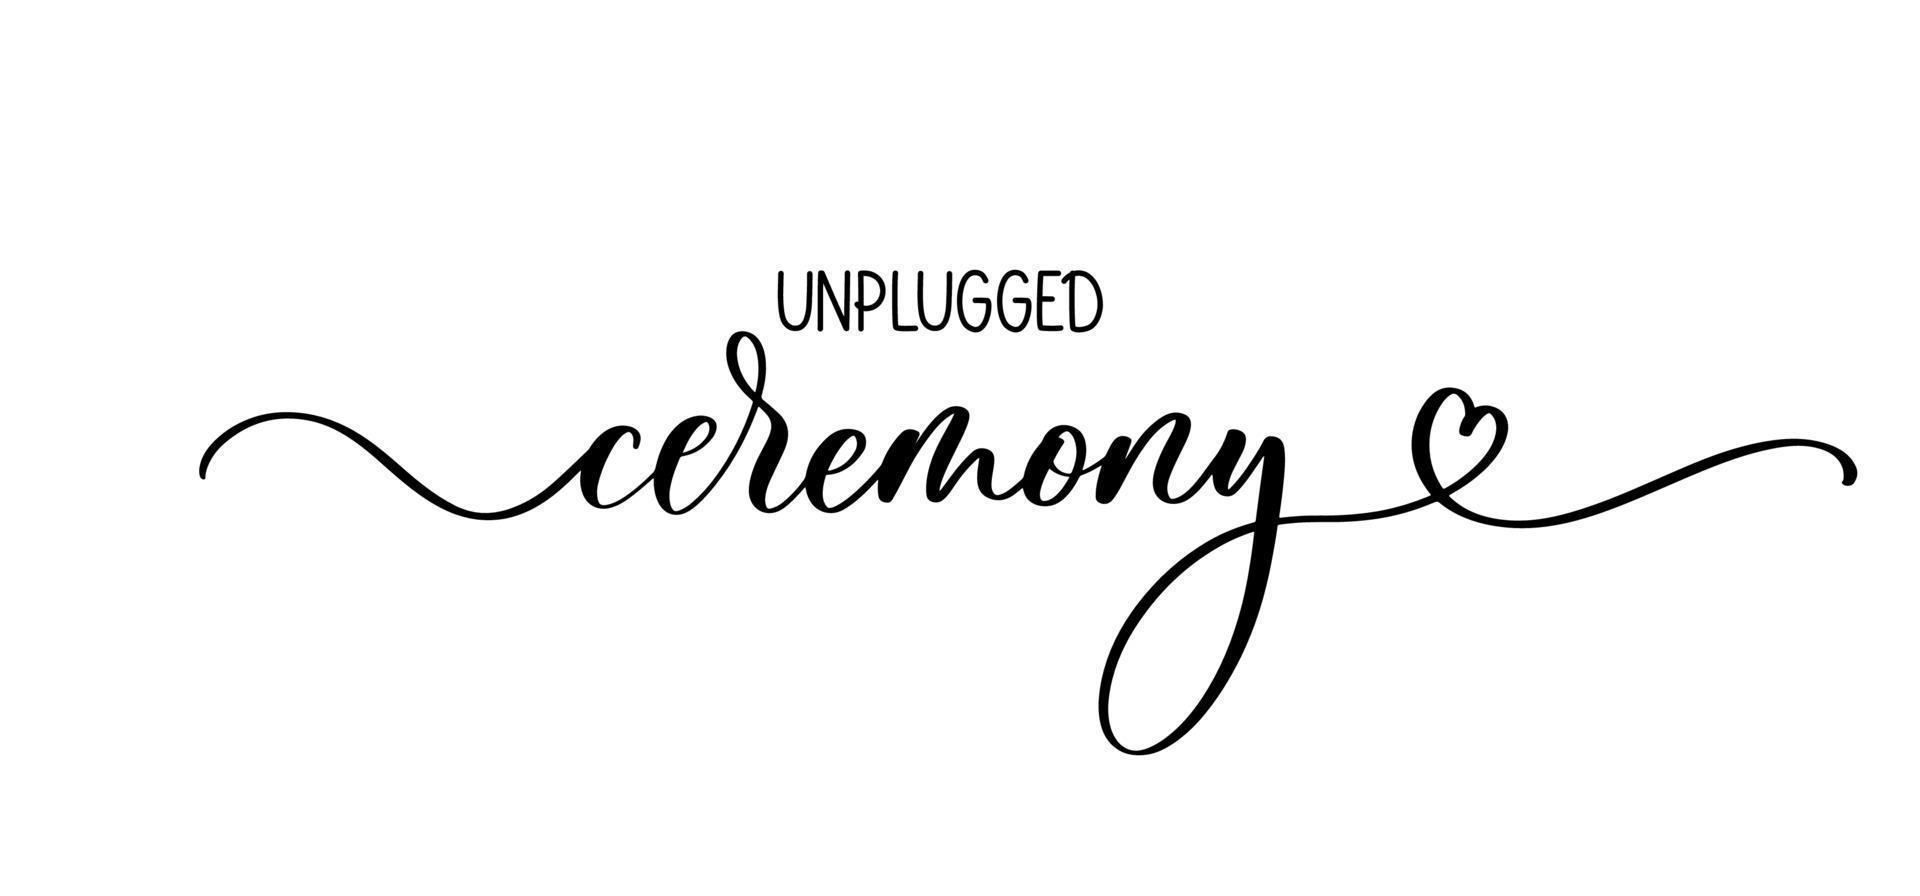 Unplugged ceremony lettering inscription for wedding ivitation. vector